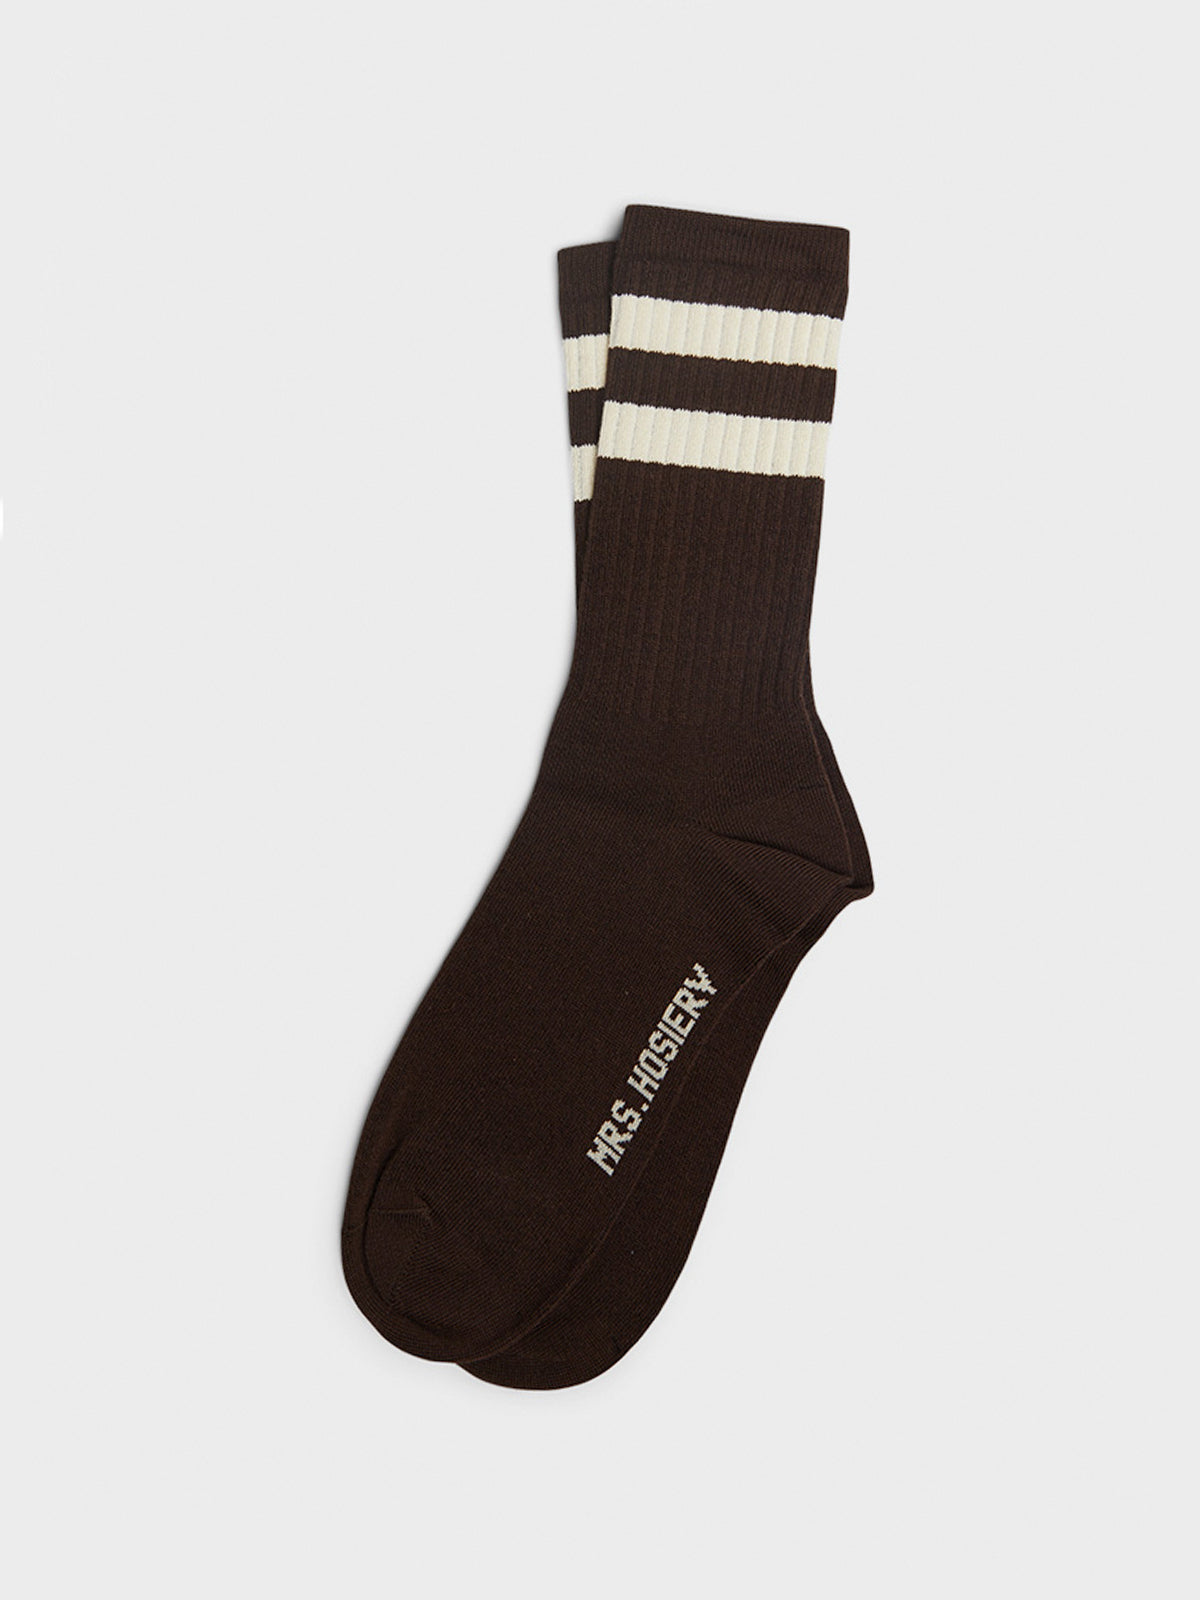 Mrs. Sporty Premium Socks in Brown and White Stripes